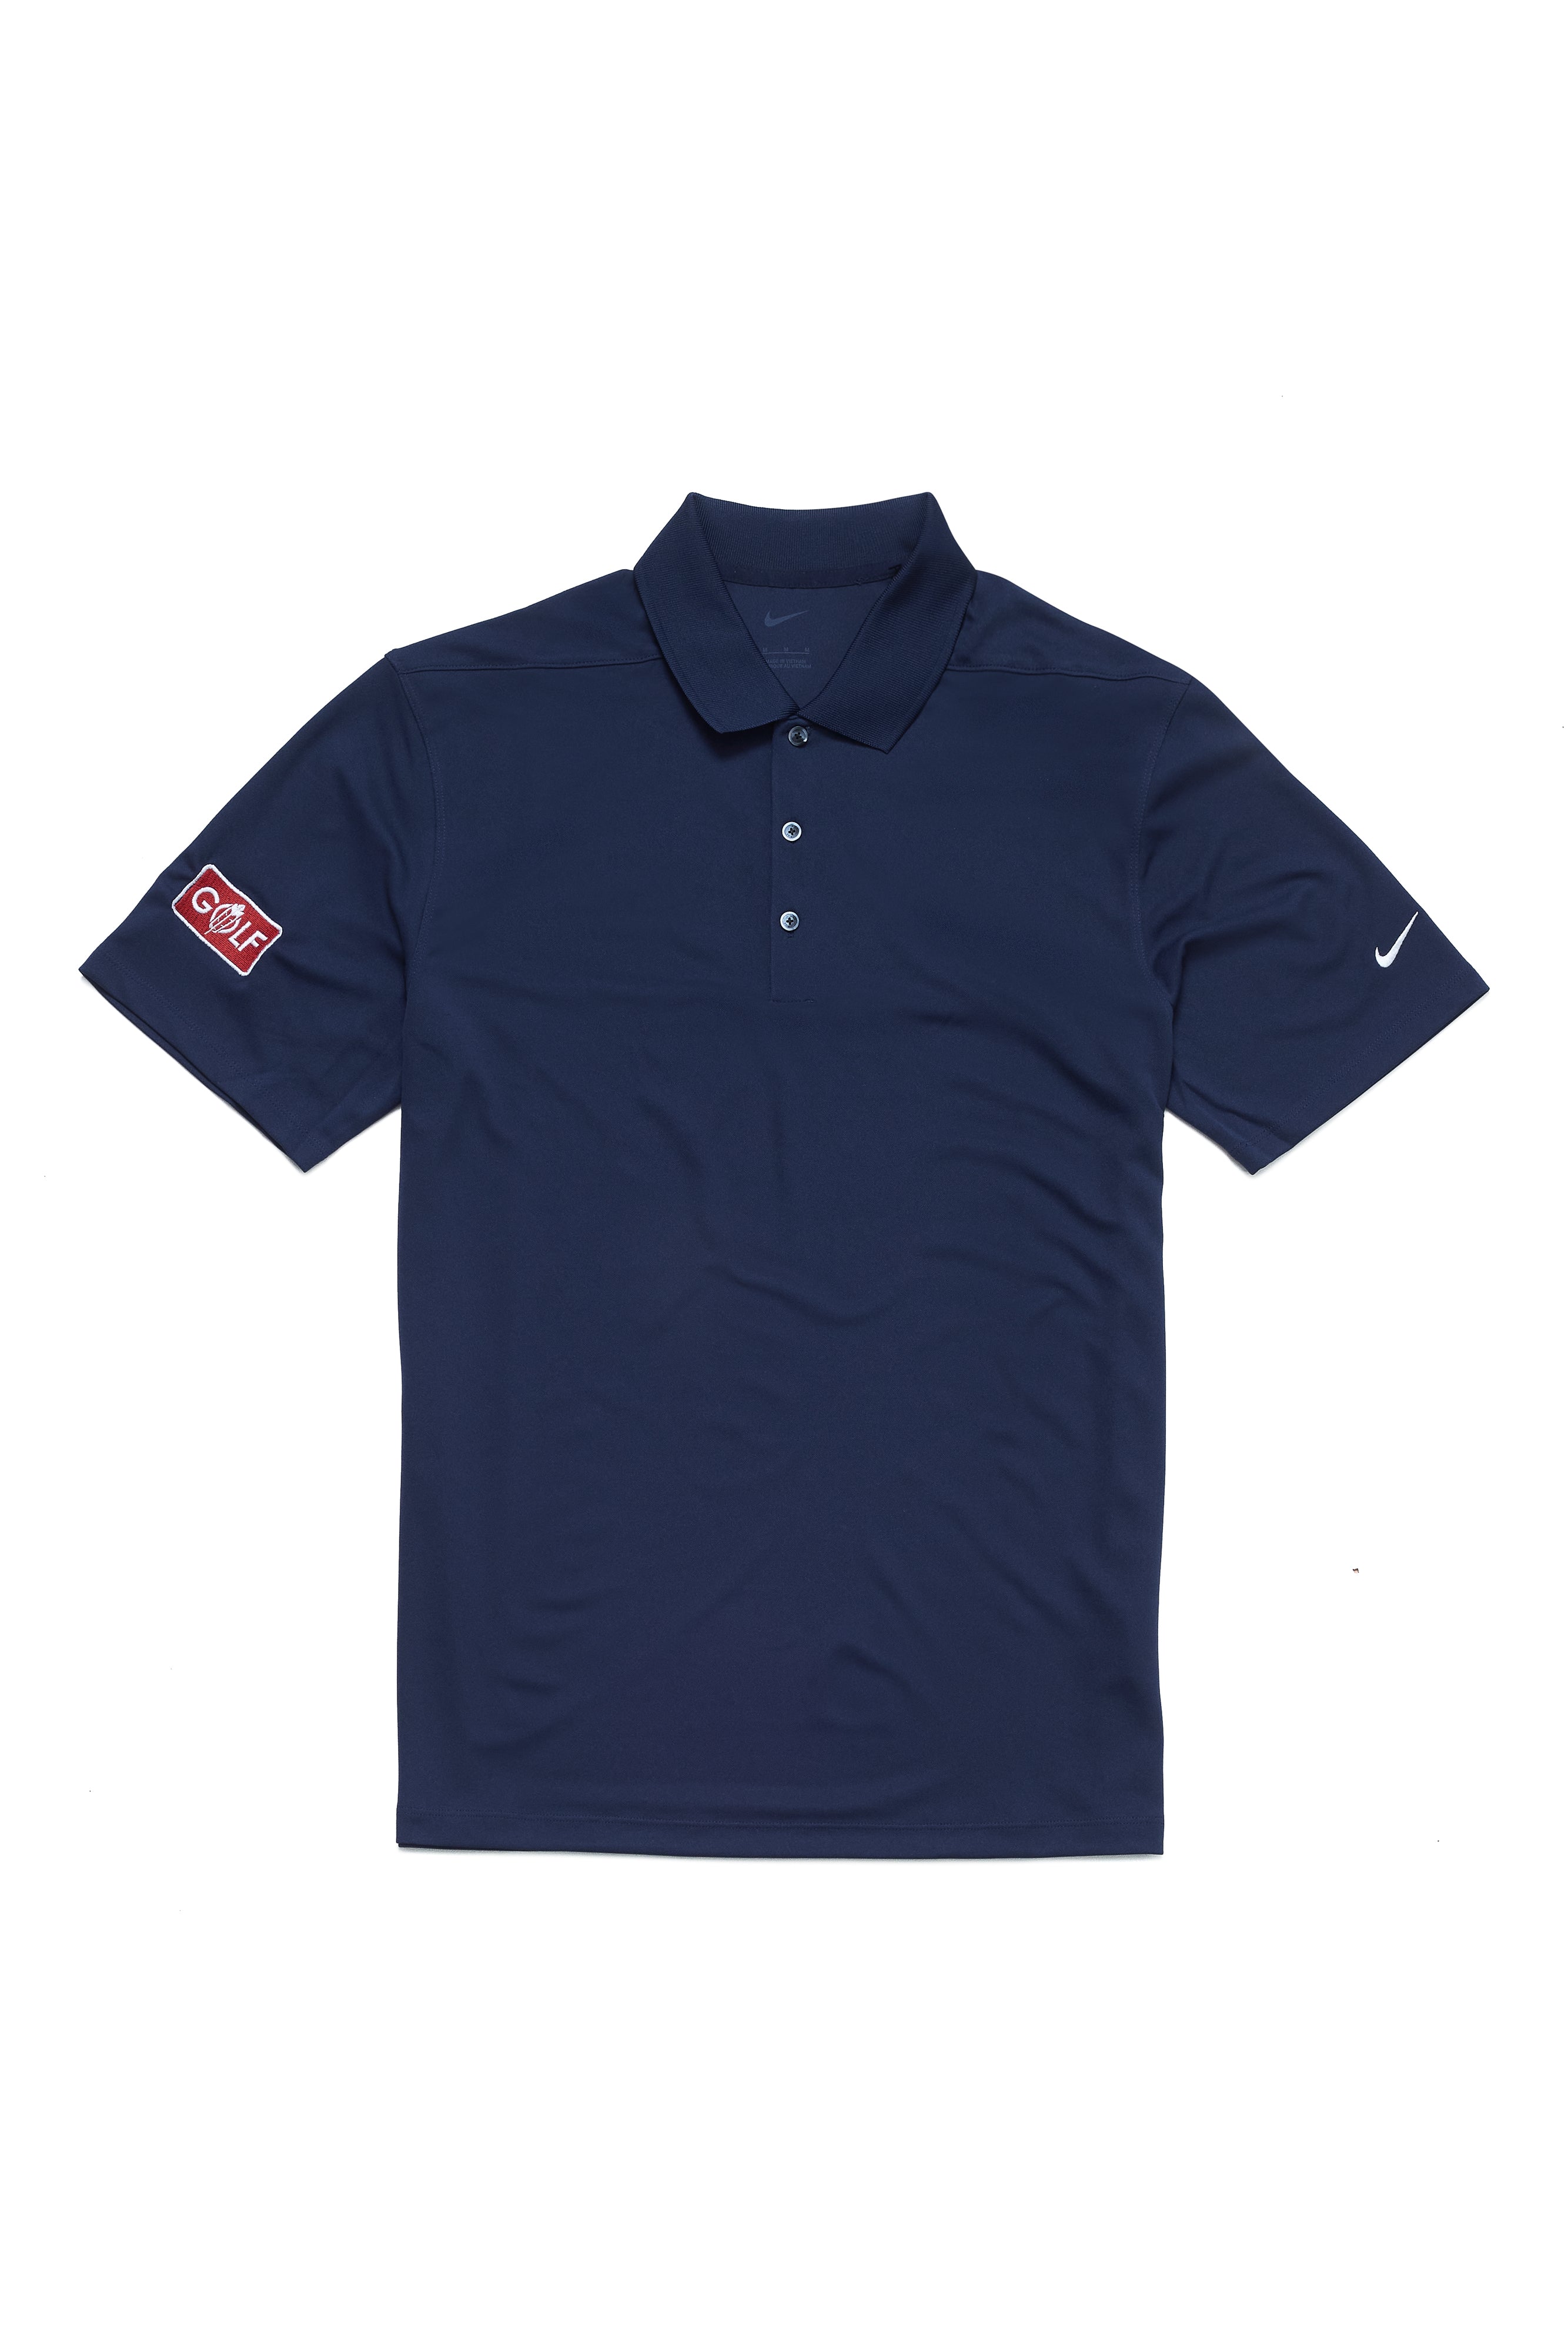 BHGC Golf Polo Shirt - Navy